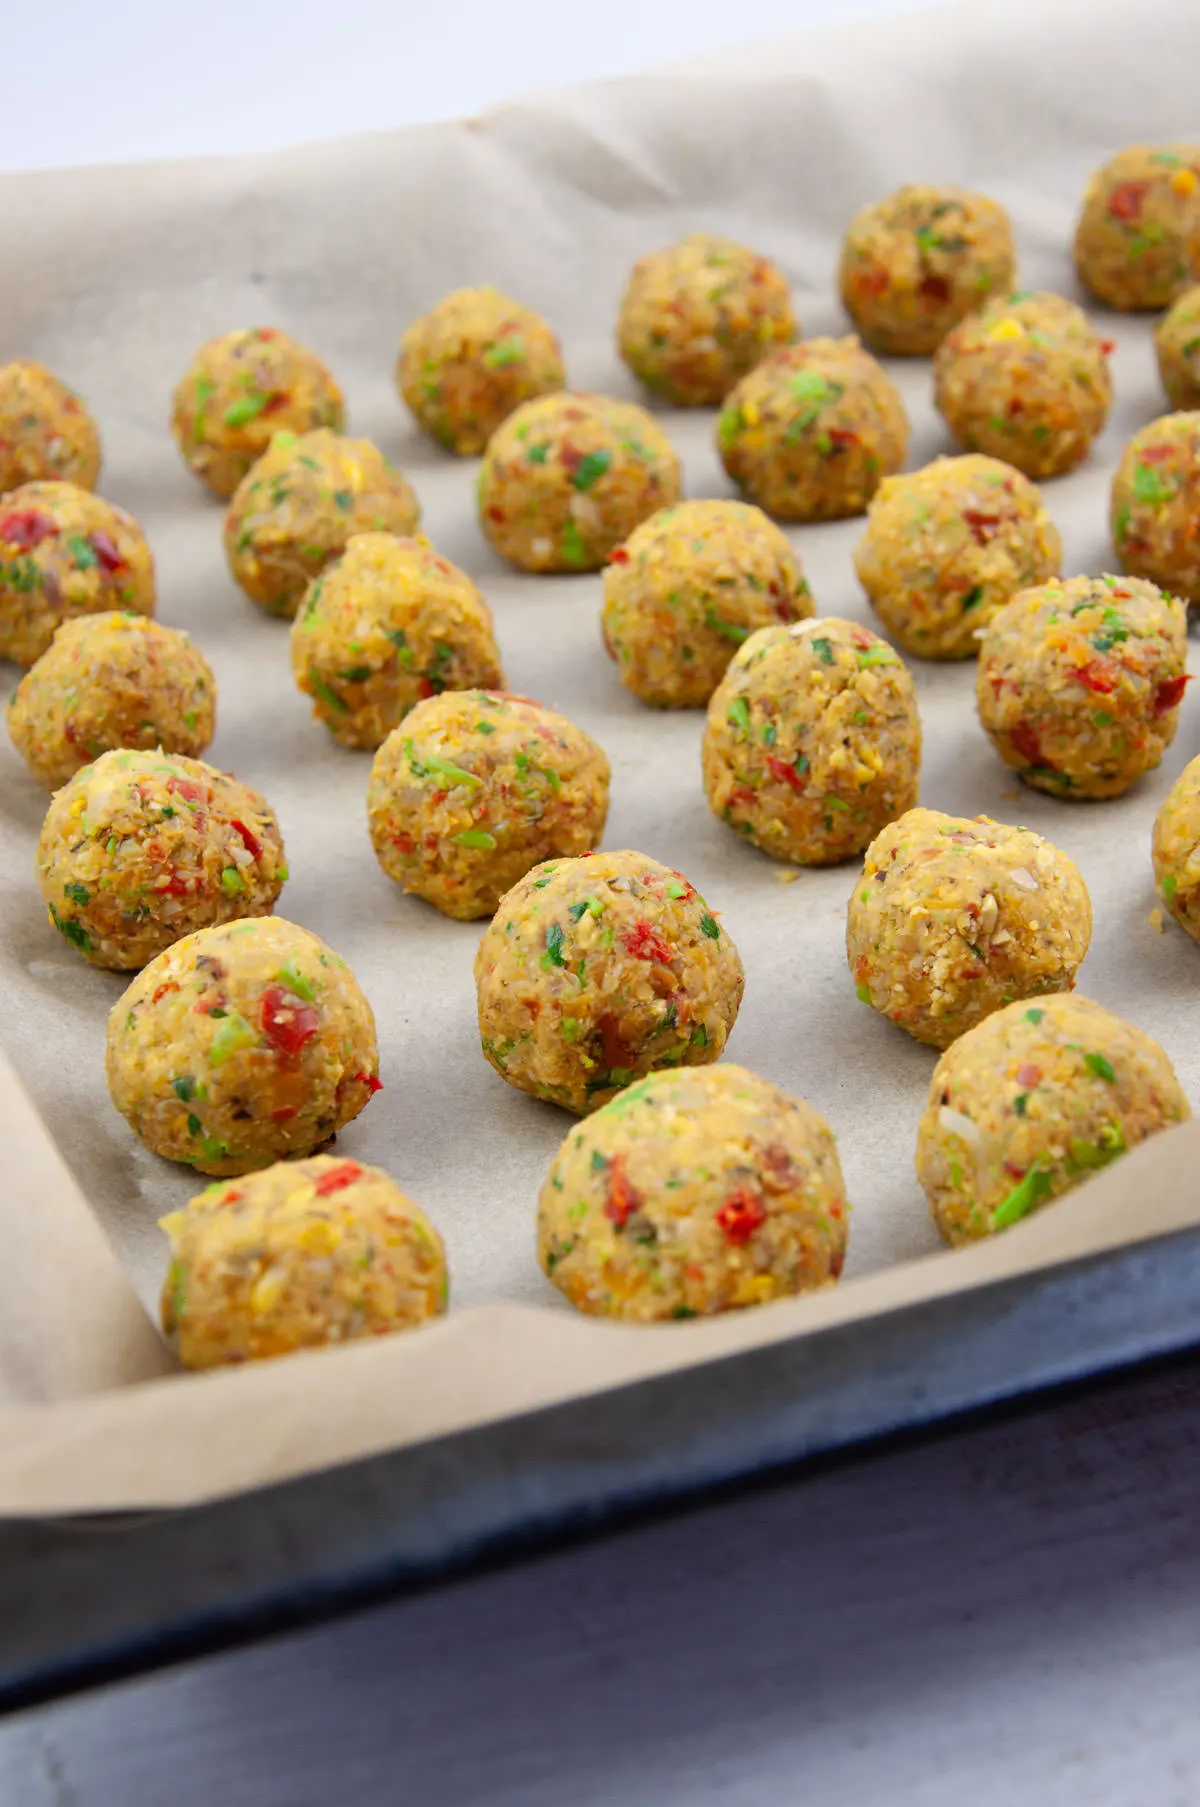 Ikea-Style Veggie Balls before baking